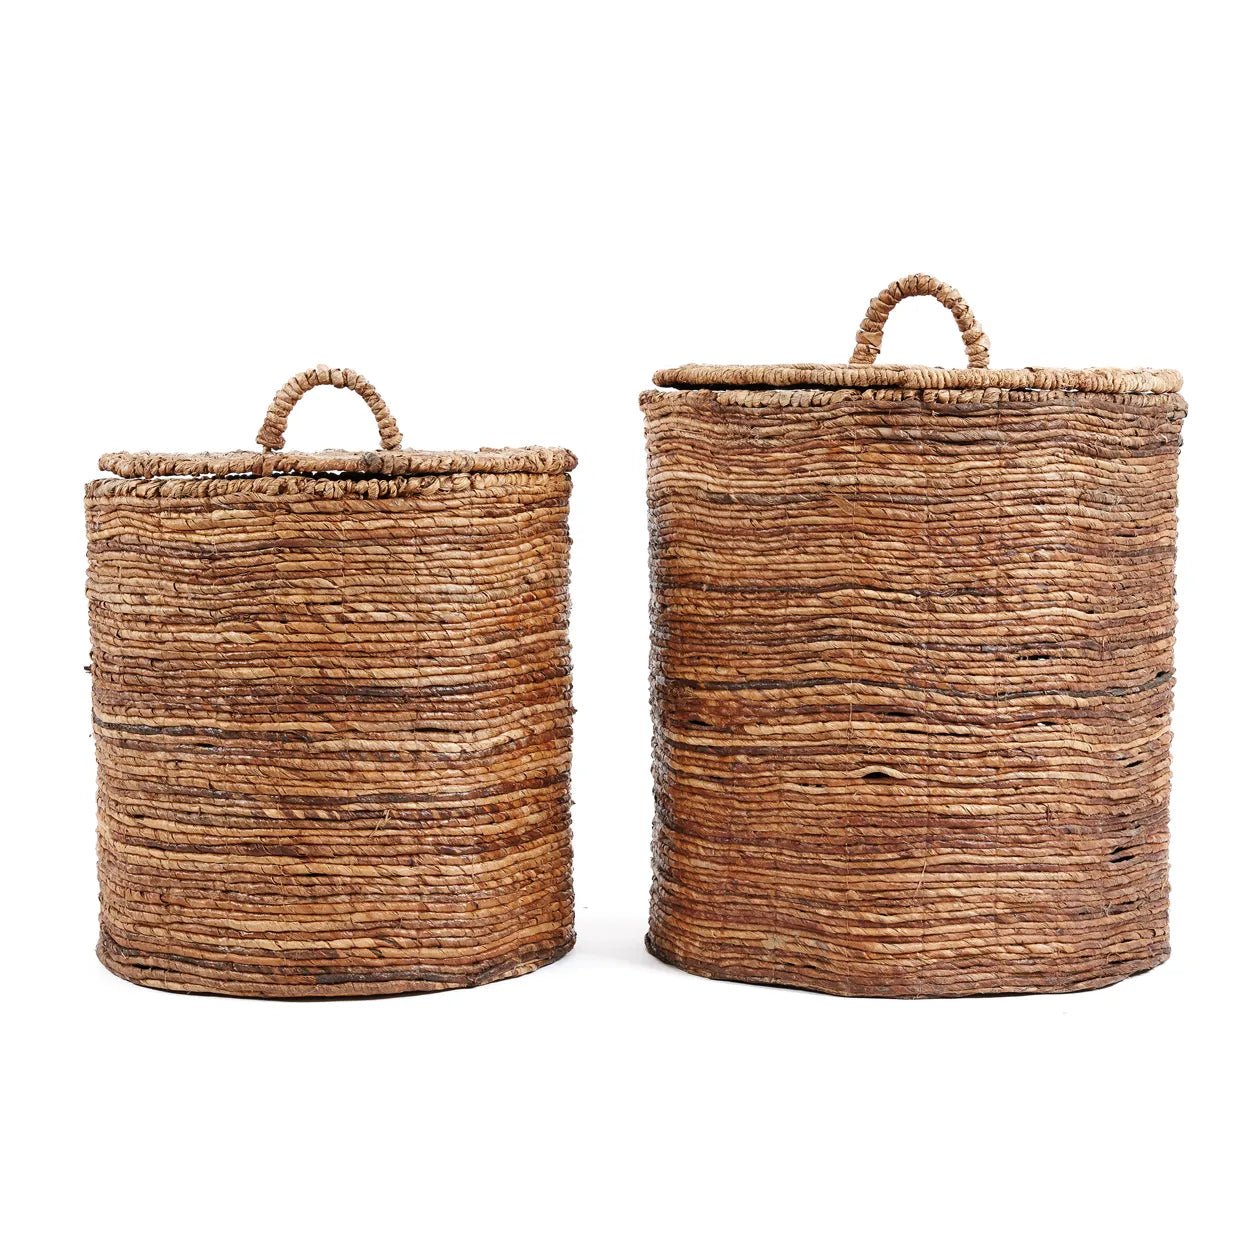 The Chingon Banana Baskets - Natural - Set of 2 - FancyVintage.nl -